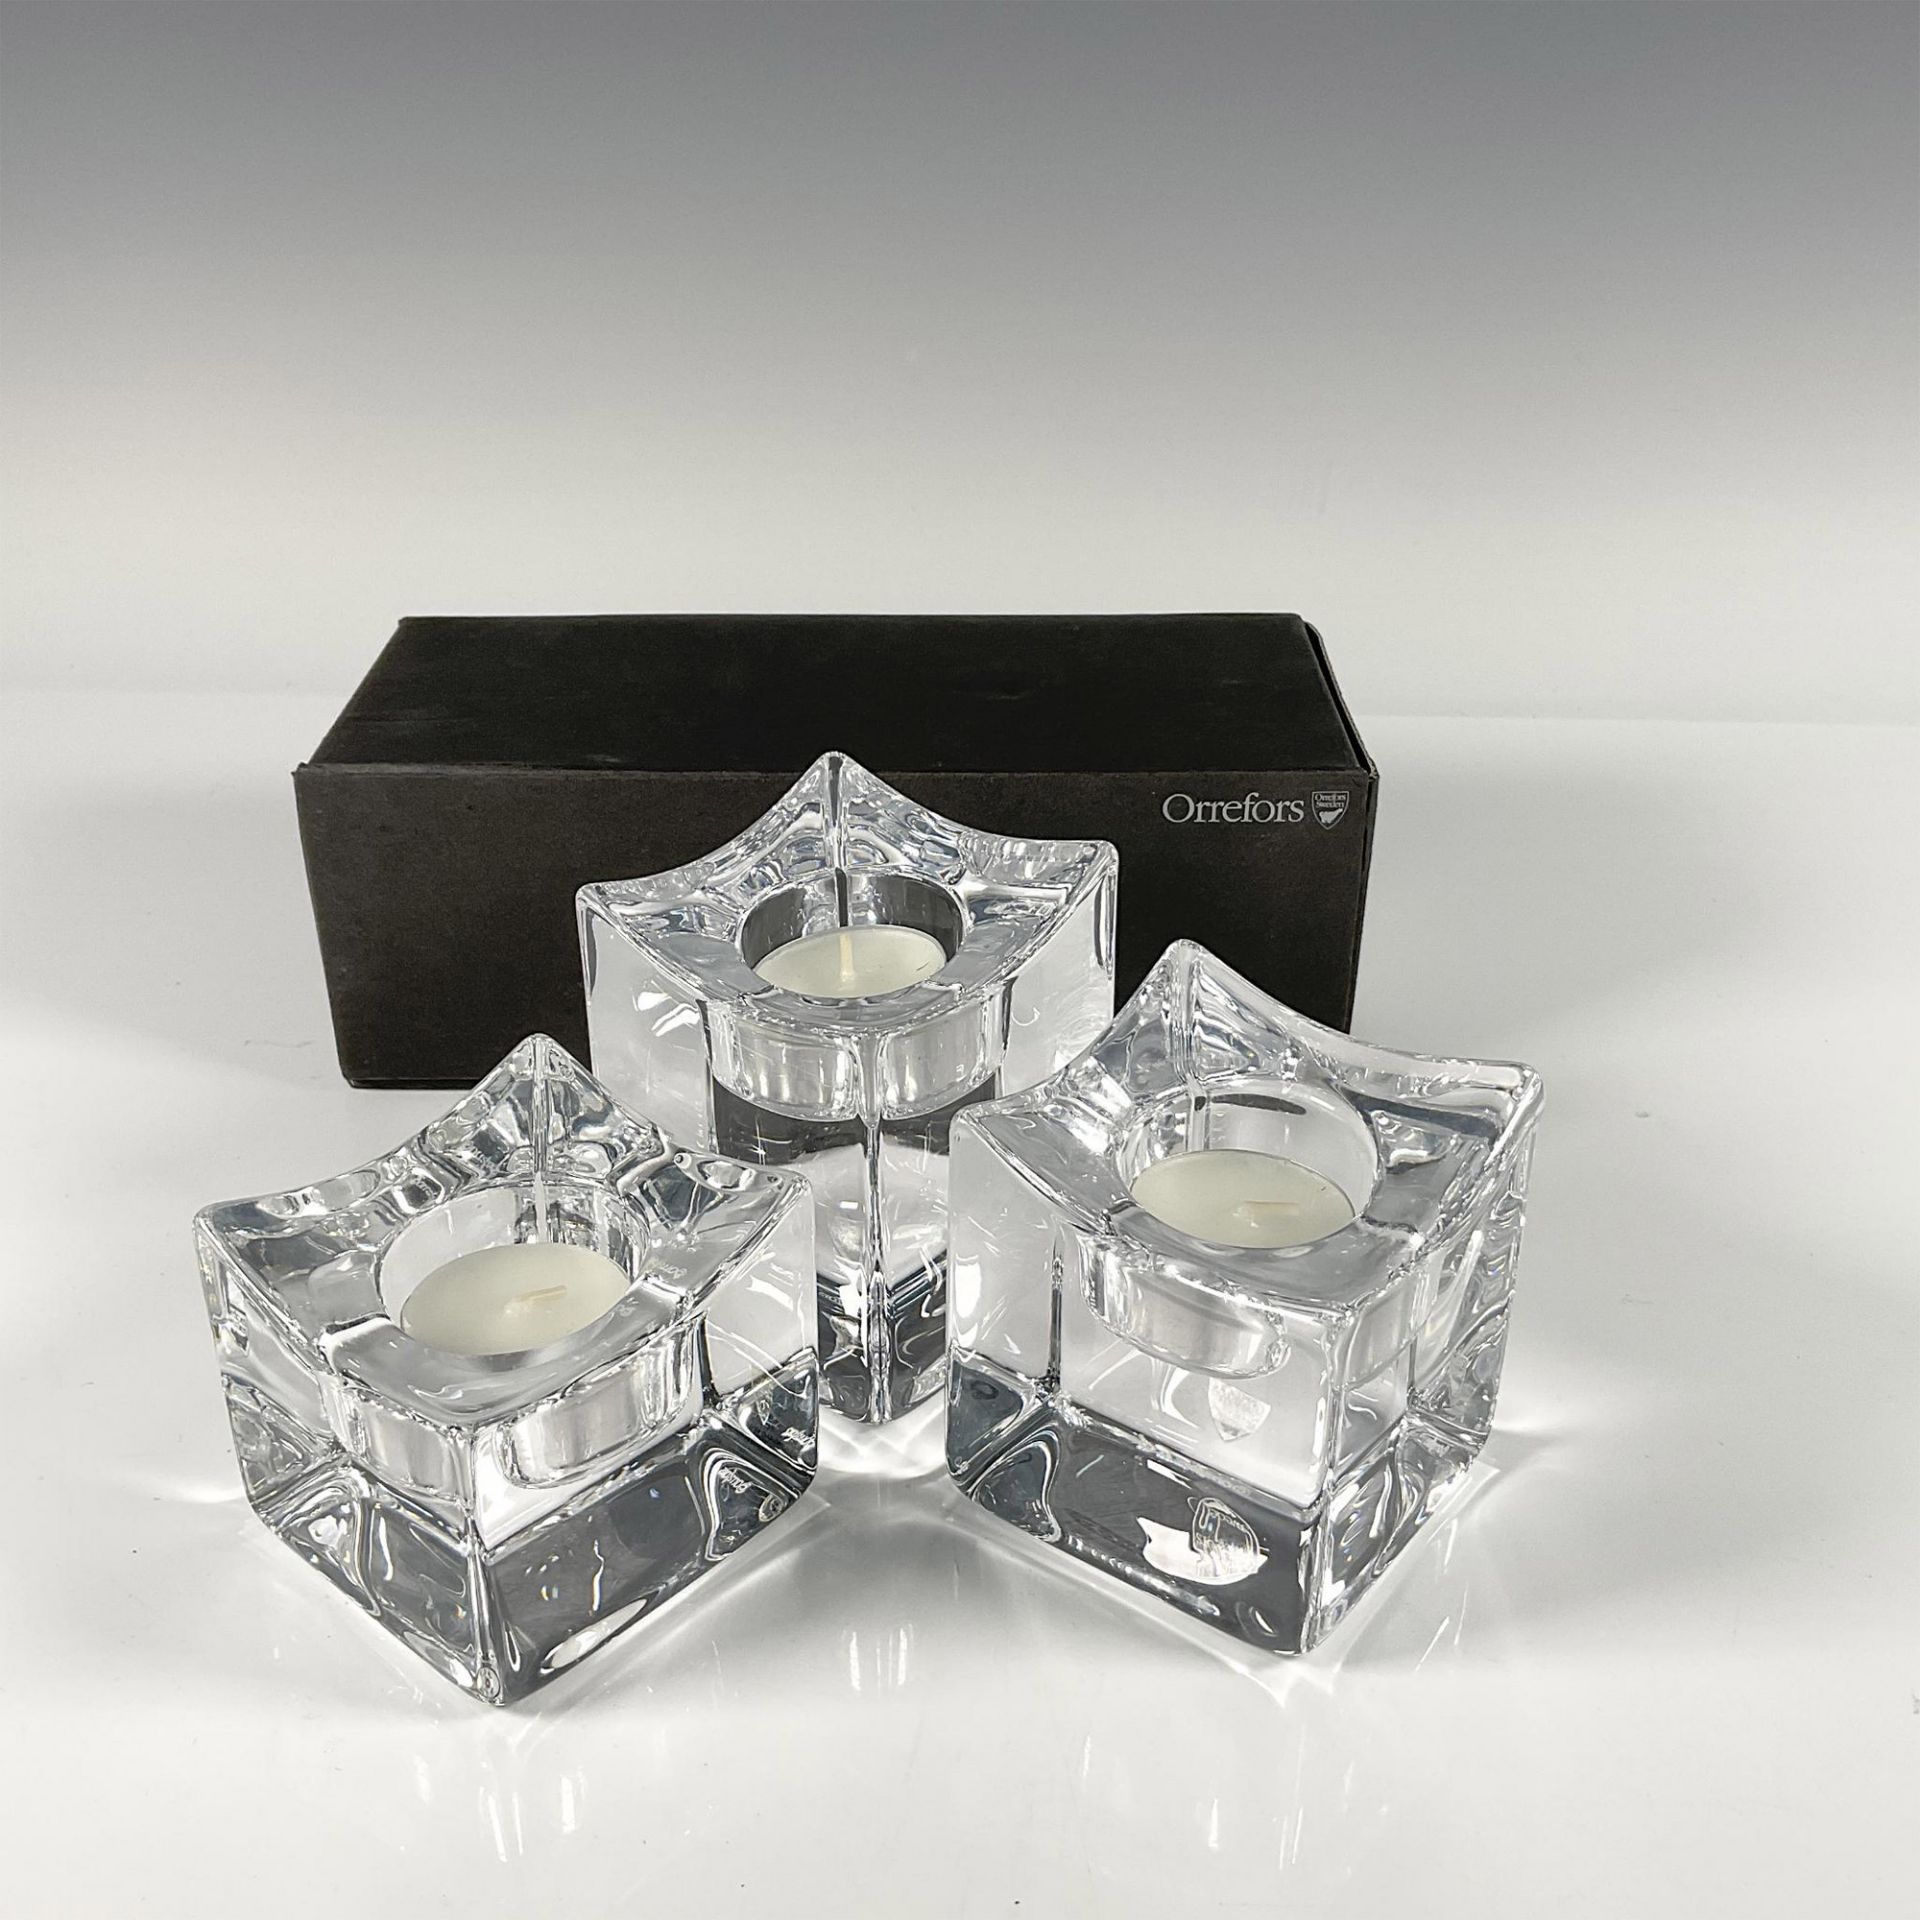 Set of 3 Orrefors Crystal Candleholders, Polaris - Image 3 of 3